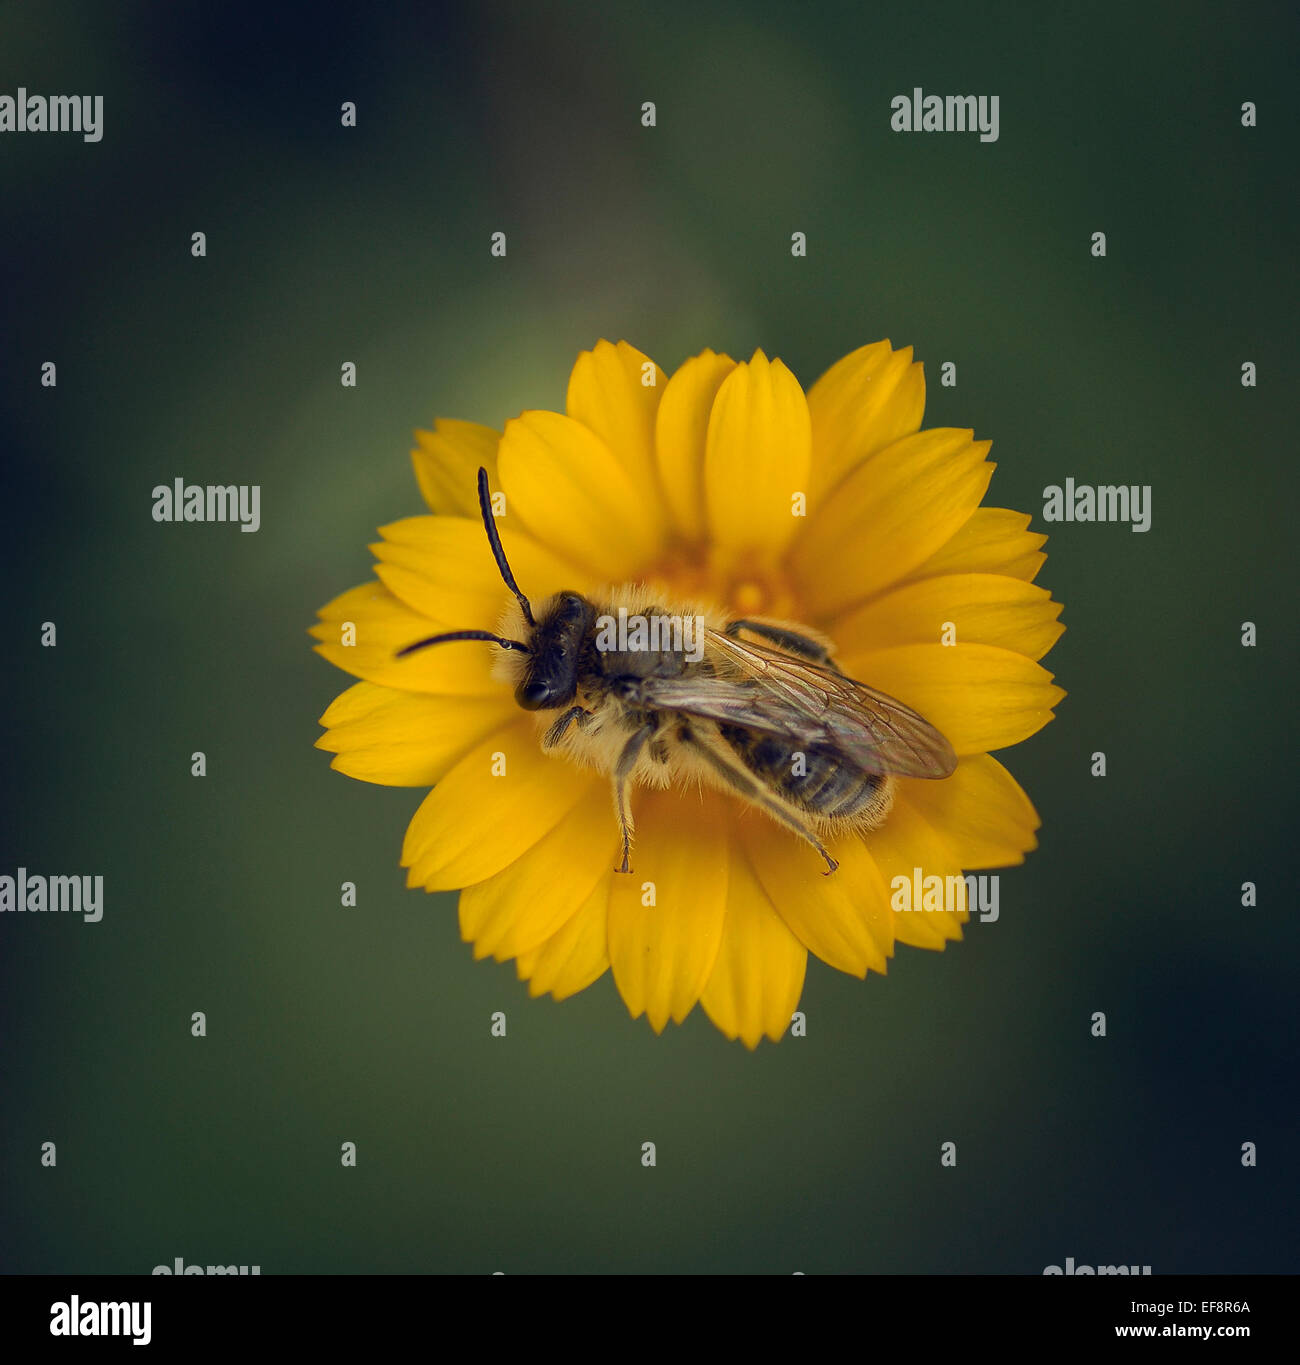 Spain, Andalucia, Granada, Loja, Worker bee pollinating yellow flower Stock Photo